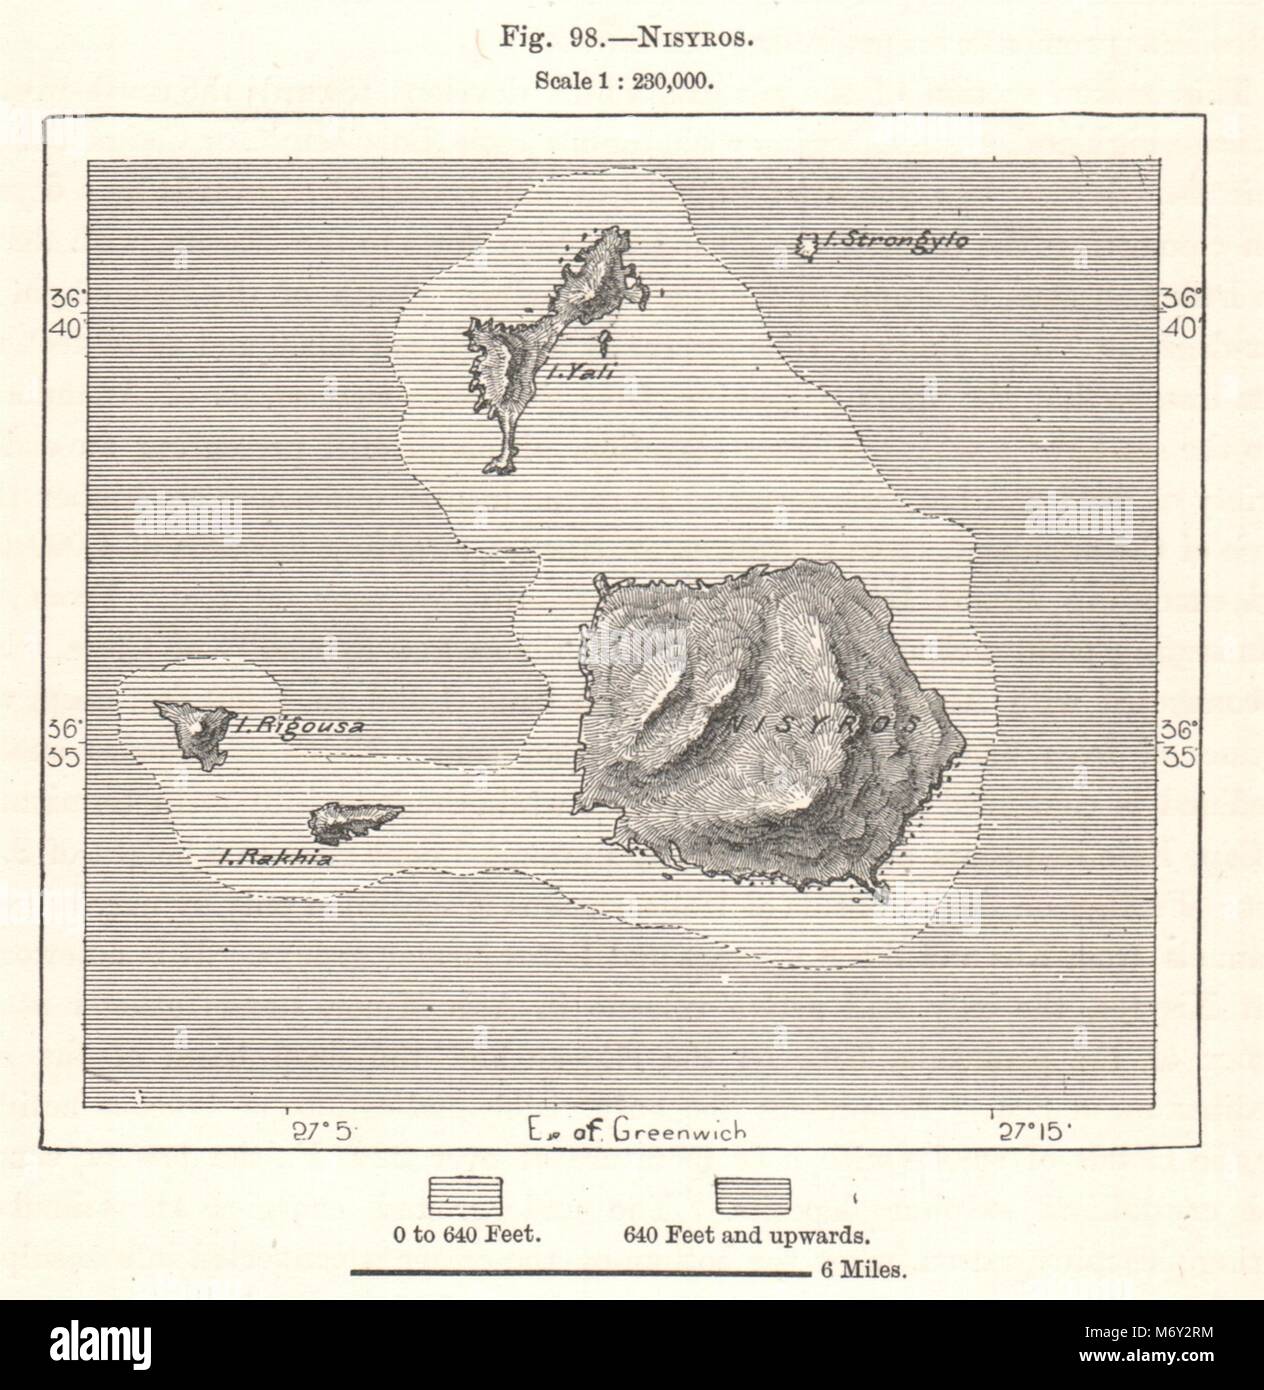 Nisyros. Greece. Sketch map 1885 old antique vintage plan chart Stock Photo